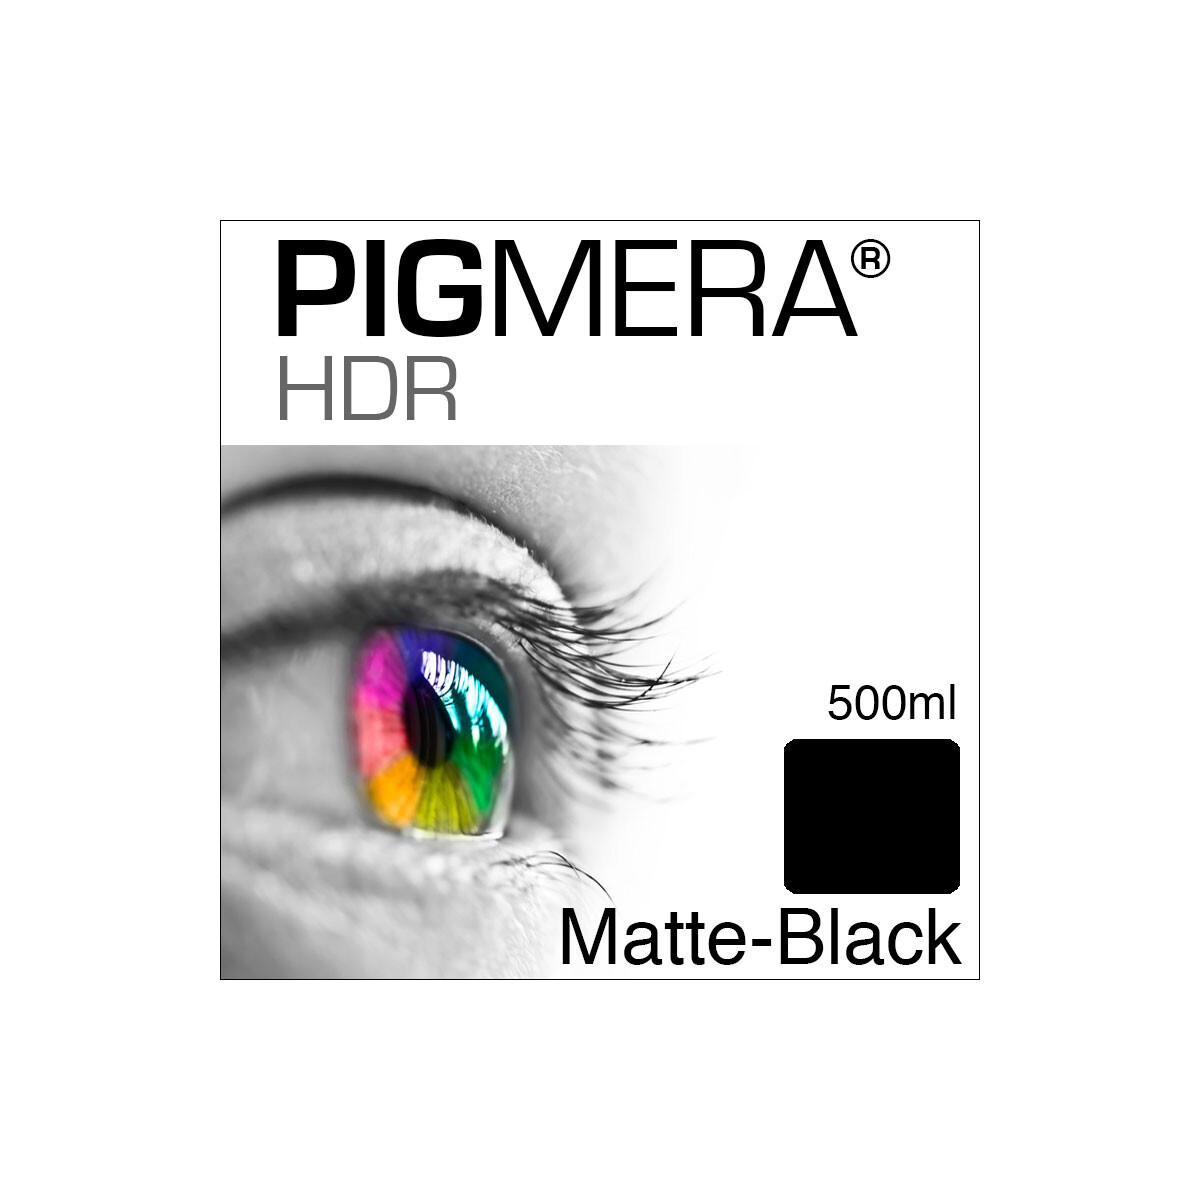 farbenwerk Pigmera HDR Bottle Matte-Black 500ml